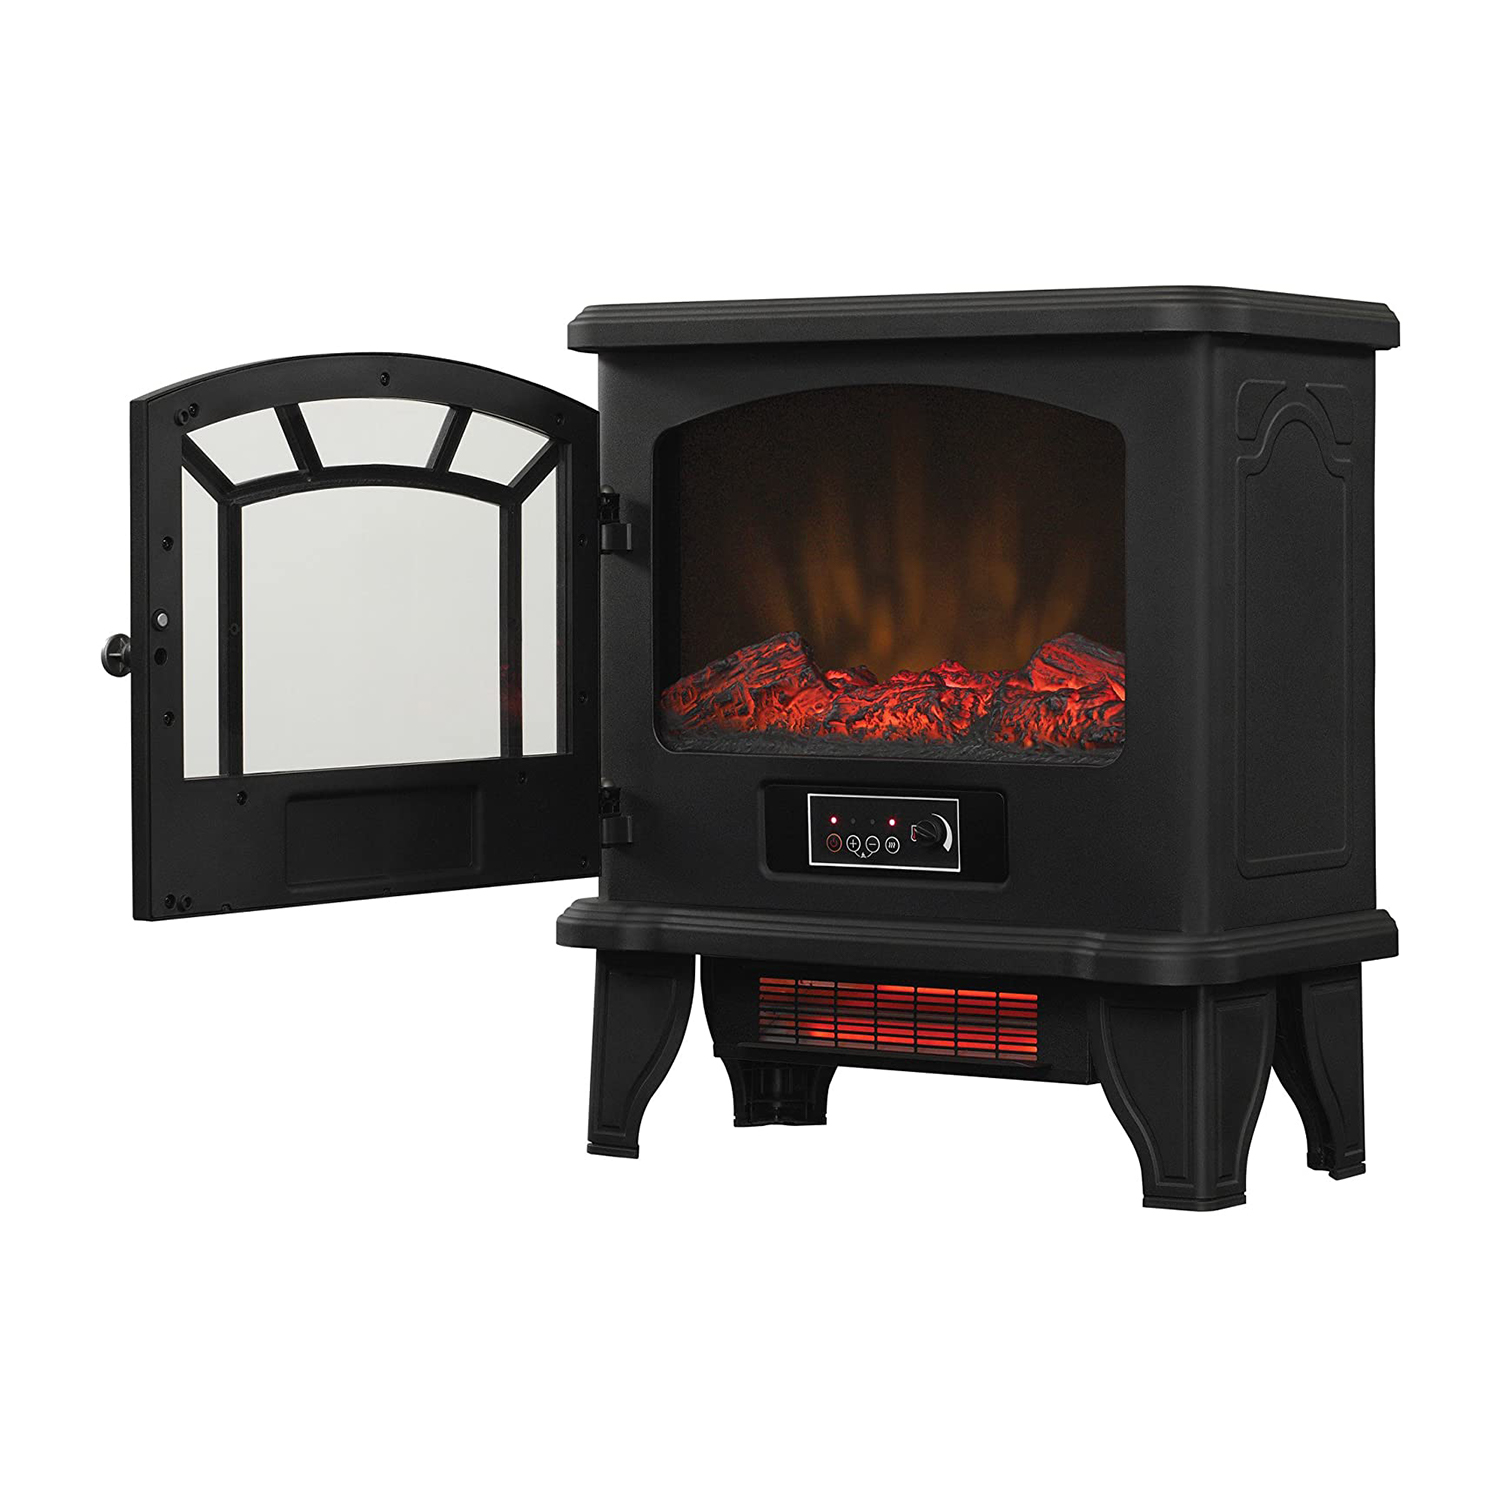 Duraflame DFI-550-22 Infrared Quartz Electric Stove Heater Fireplace